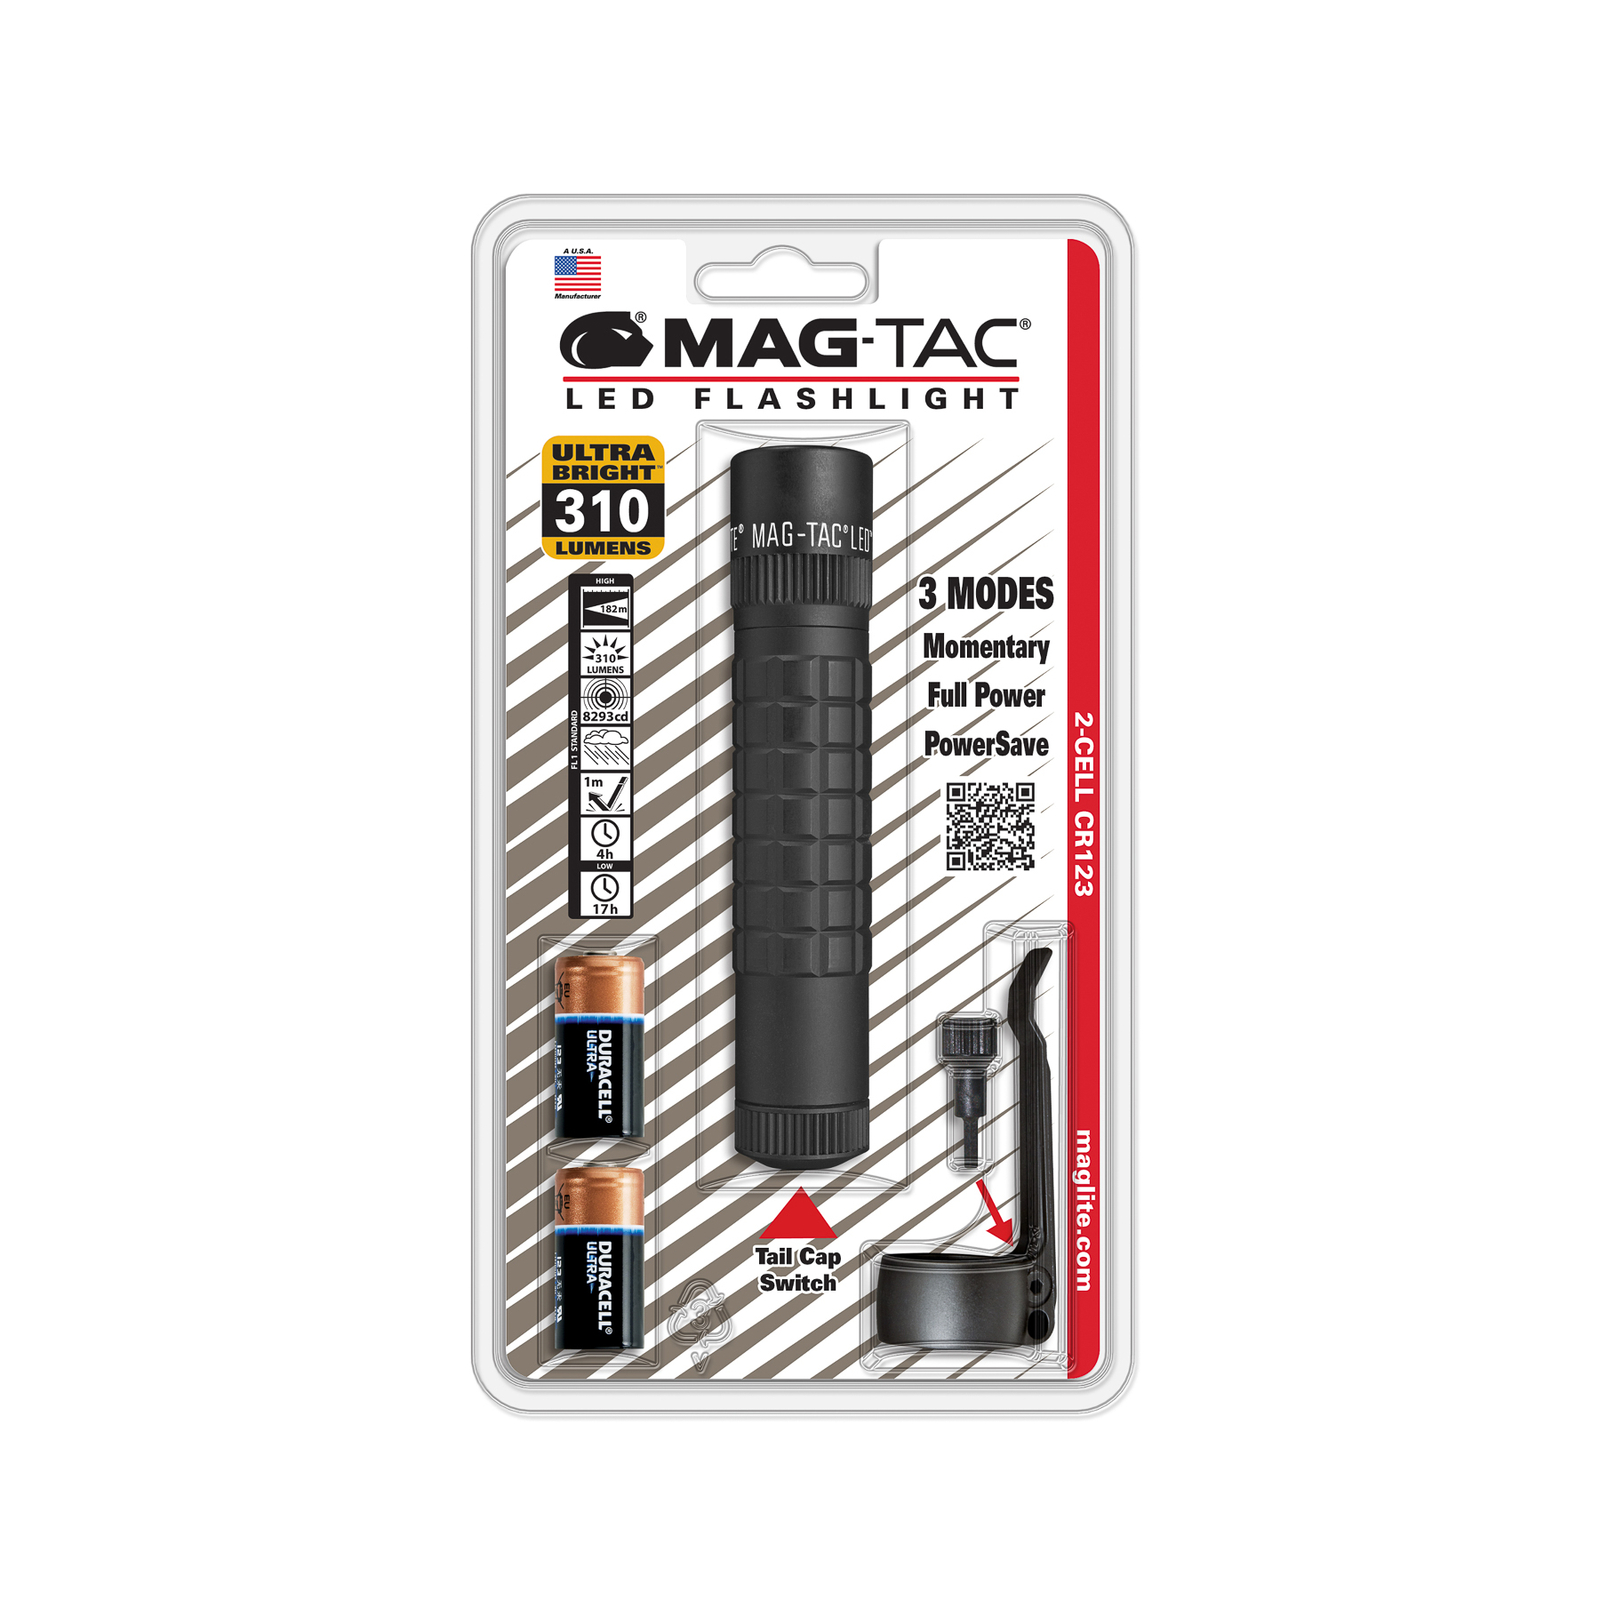 Maglite lampe de poche LED Mag-Tac, 2-Cell CR123, noir